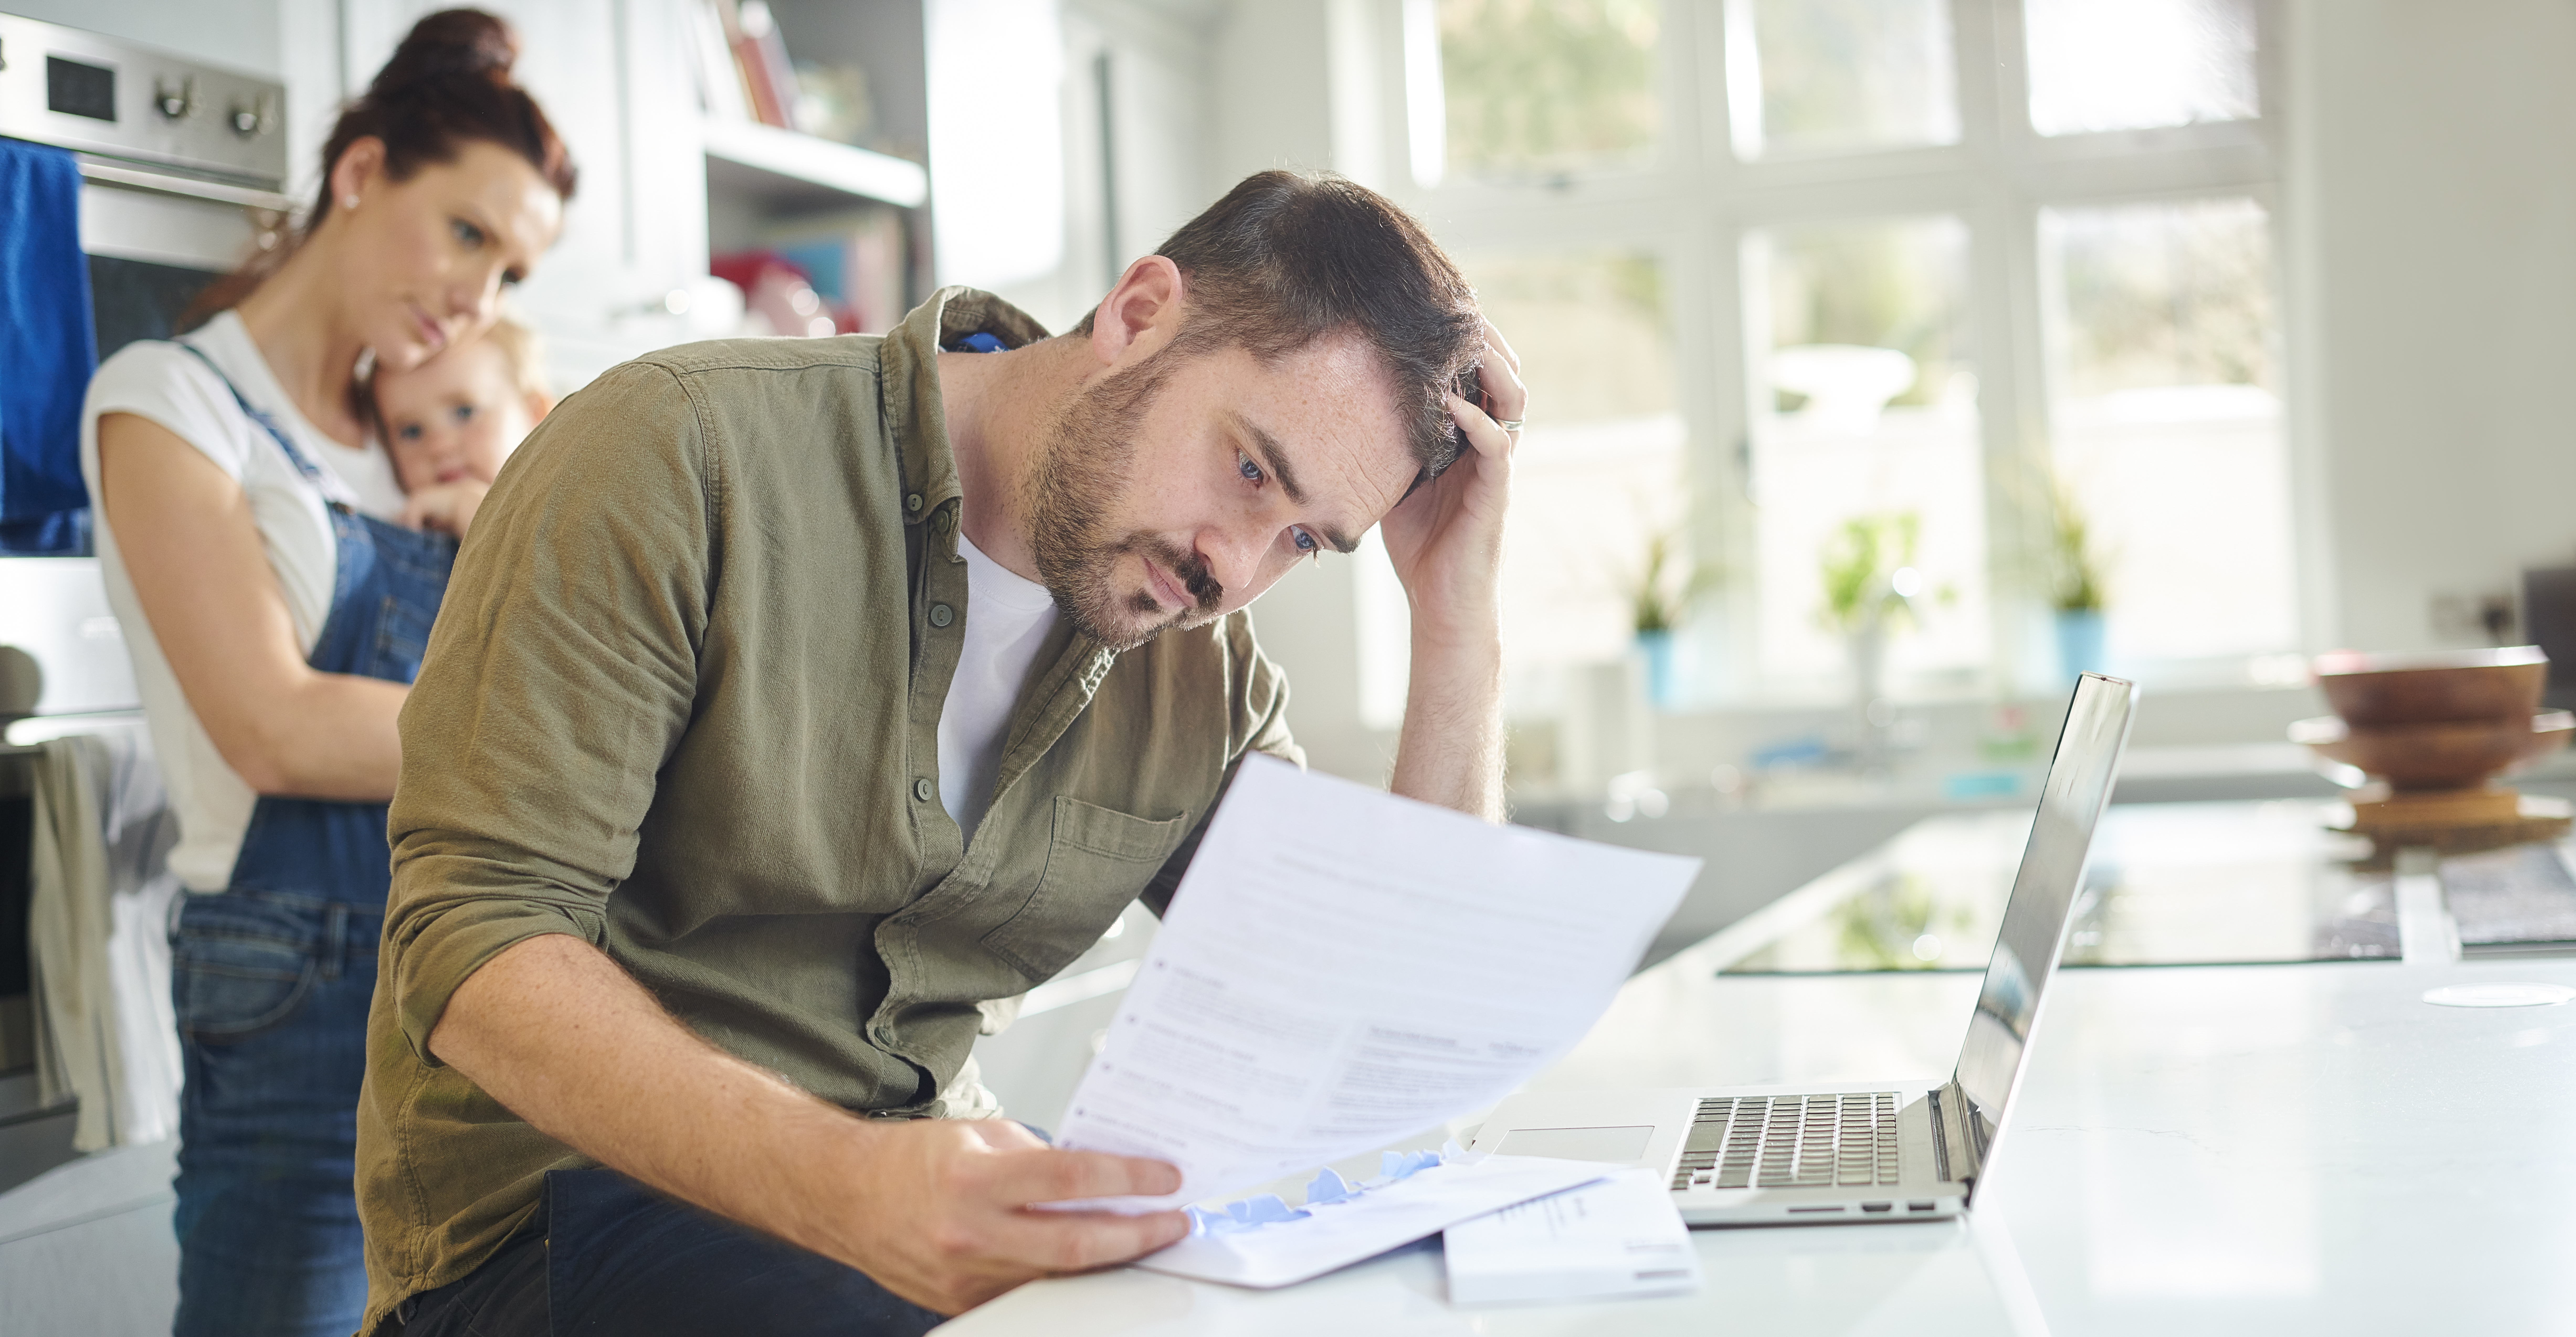 Consumer experiencing financial stress